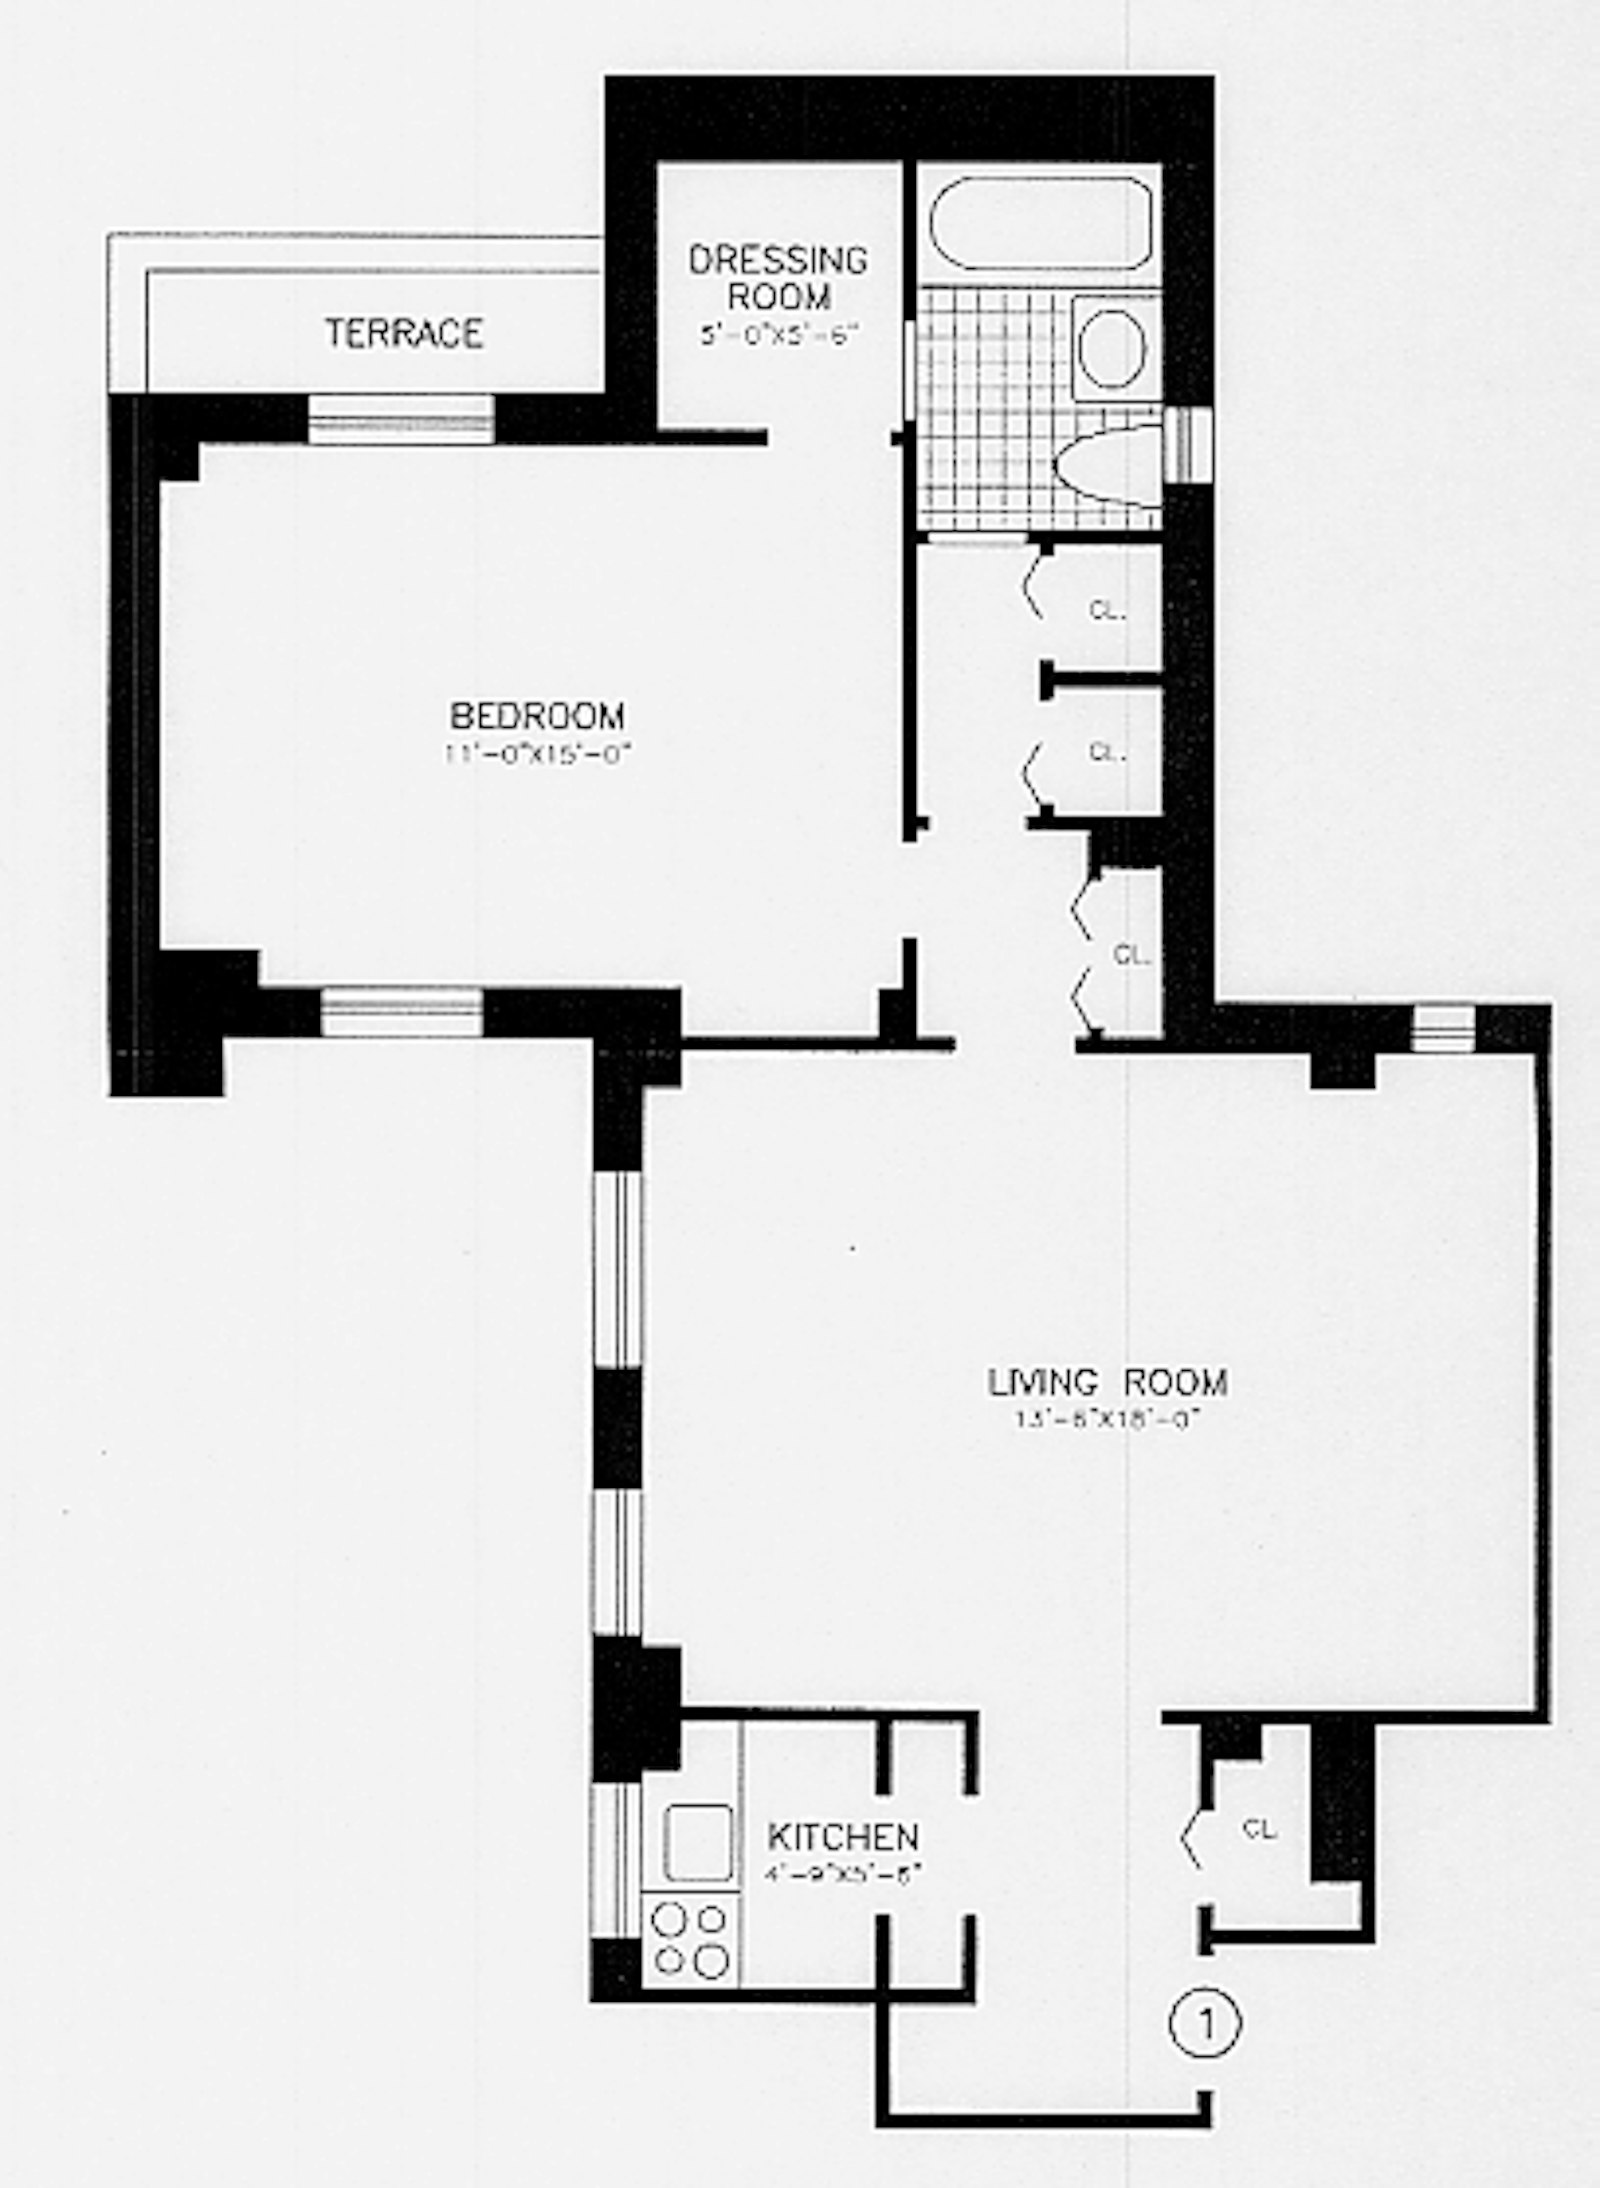 Floorplan for 108 East 38th Street, 1501